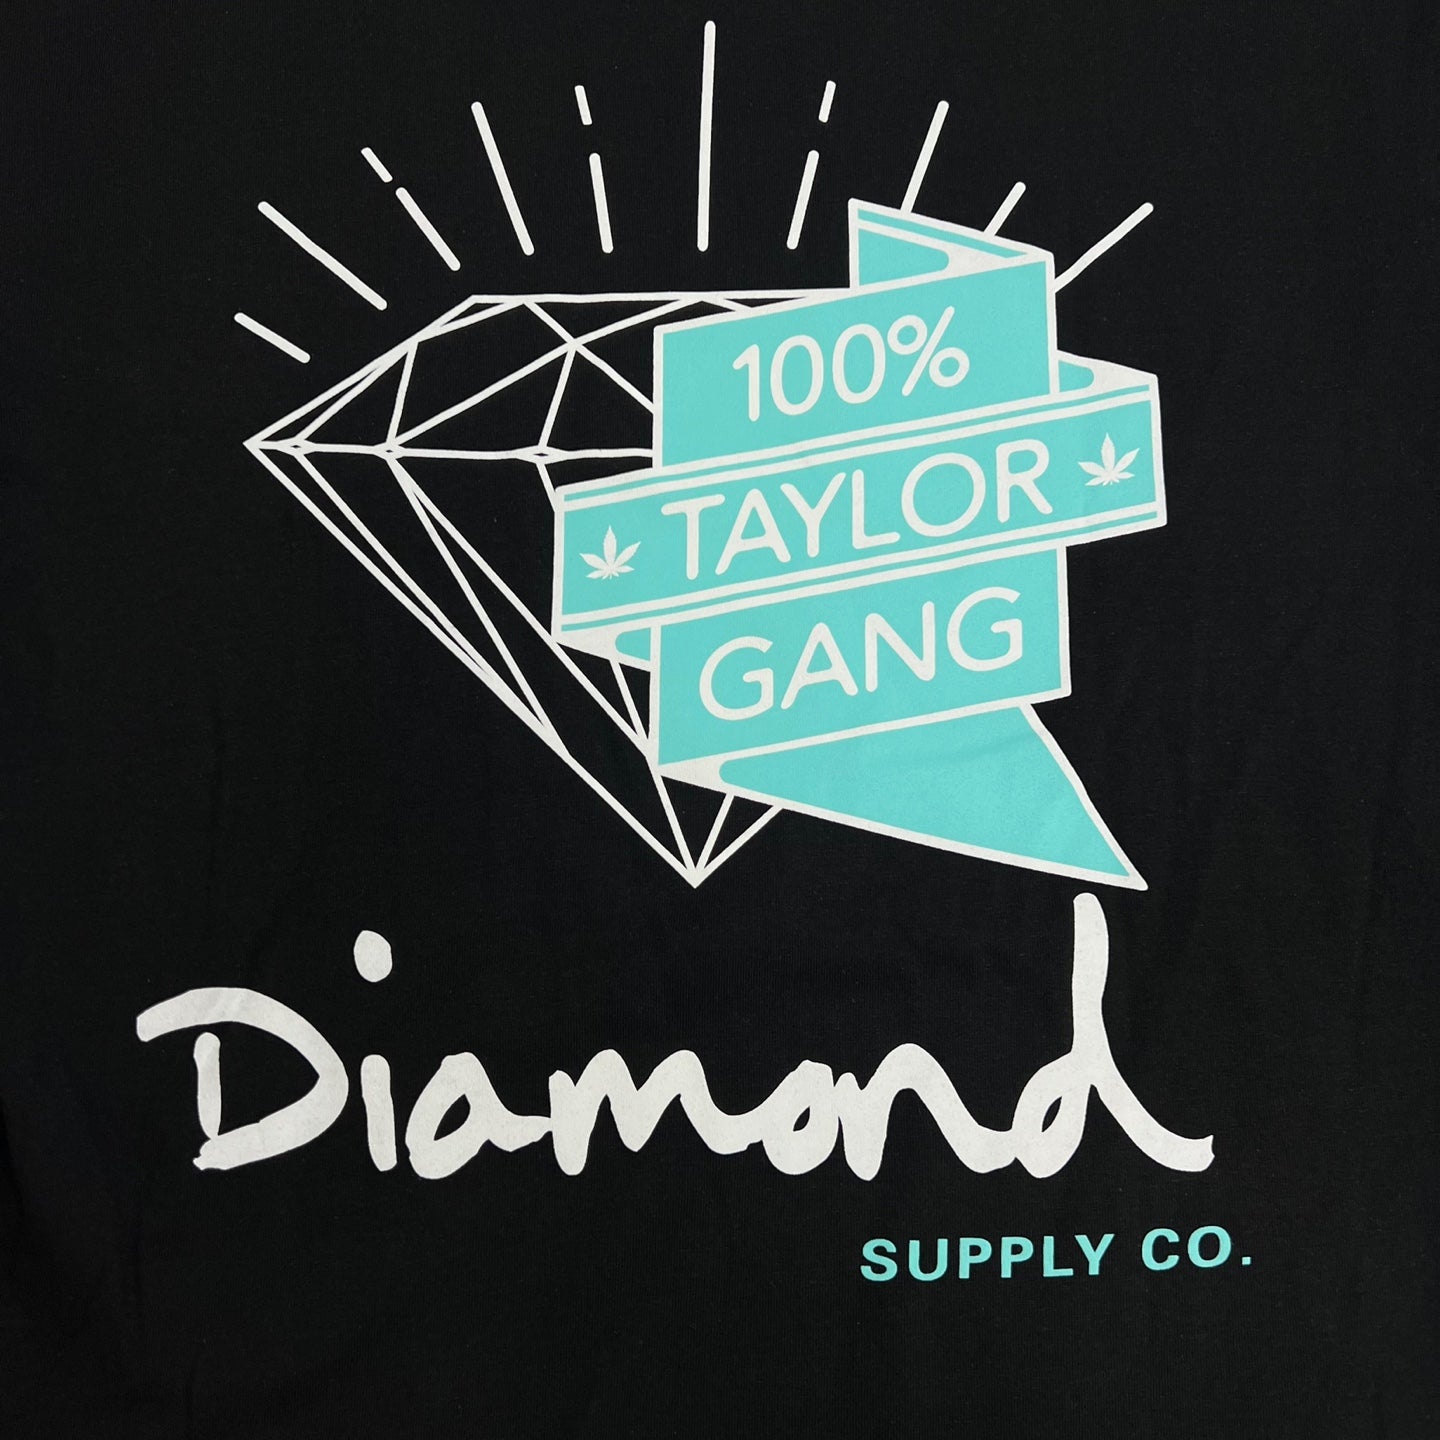 Diamond Supply 100% Taylor Gang T-Shirt